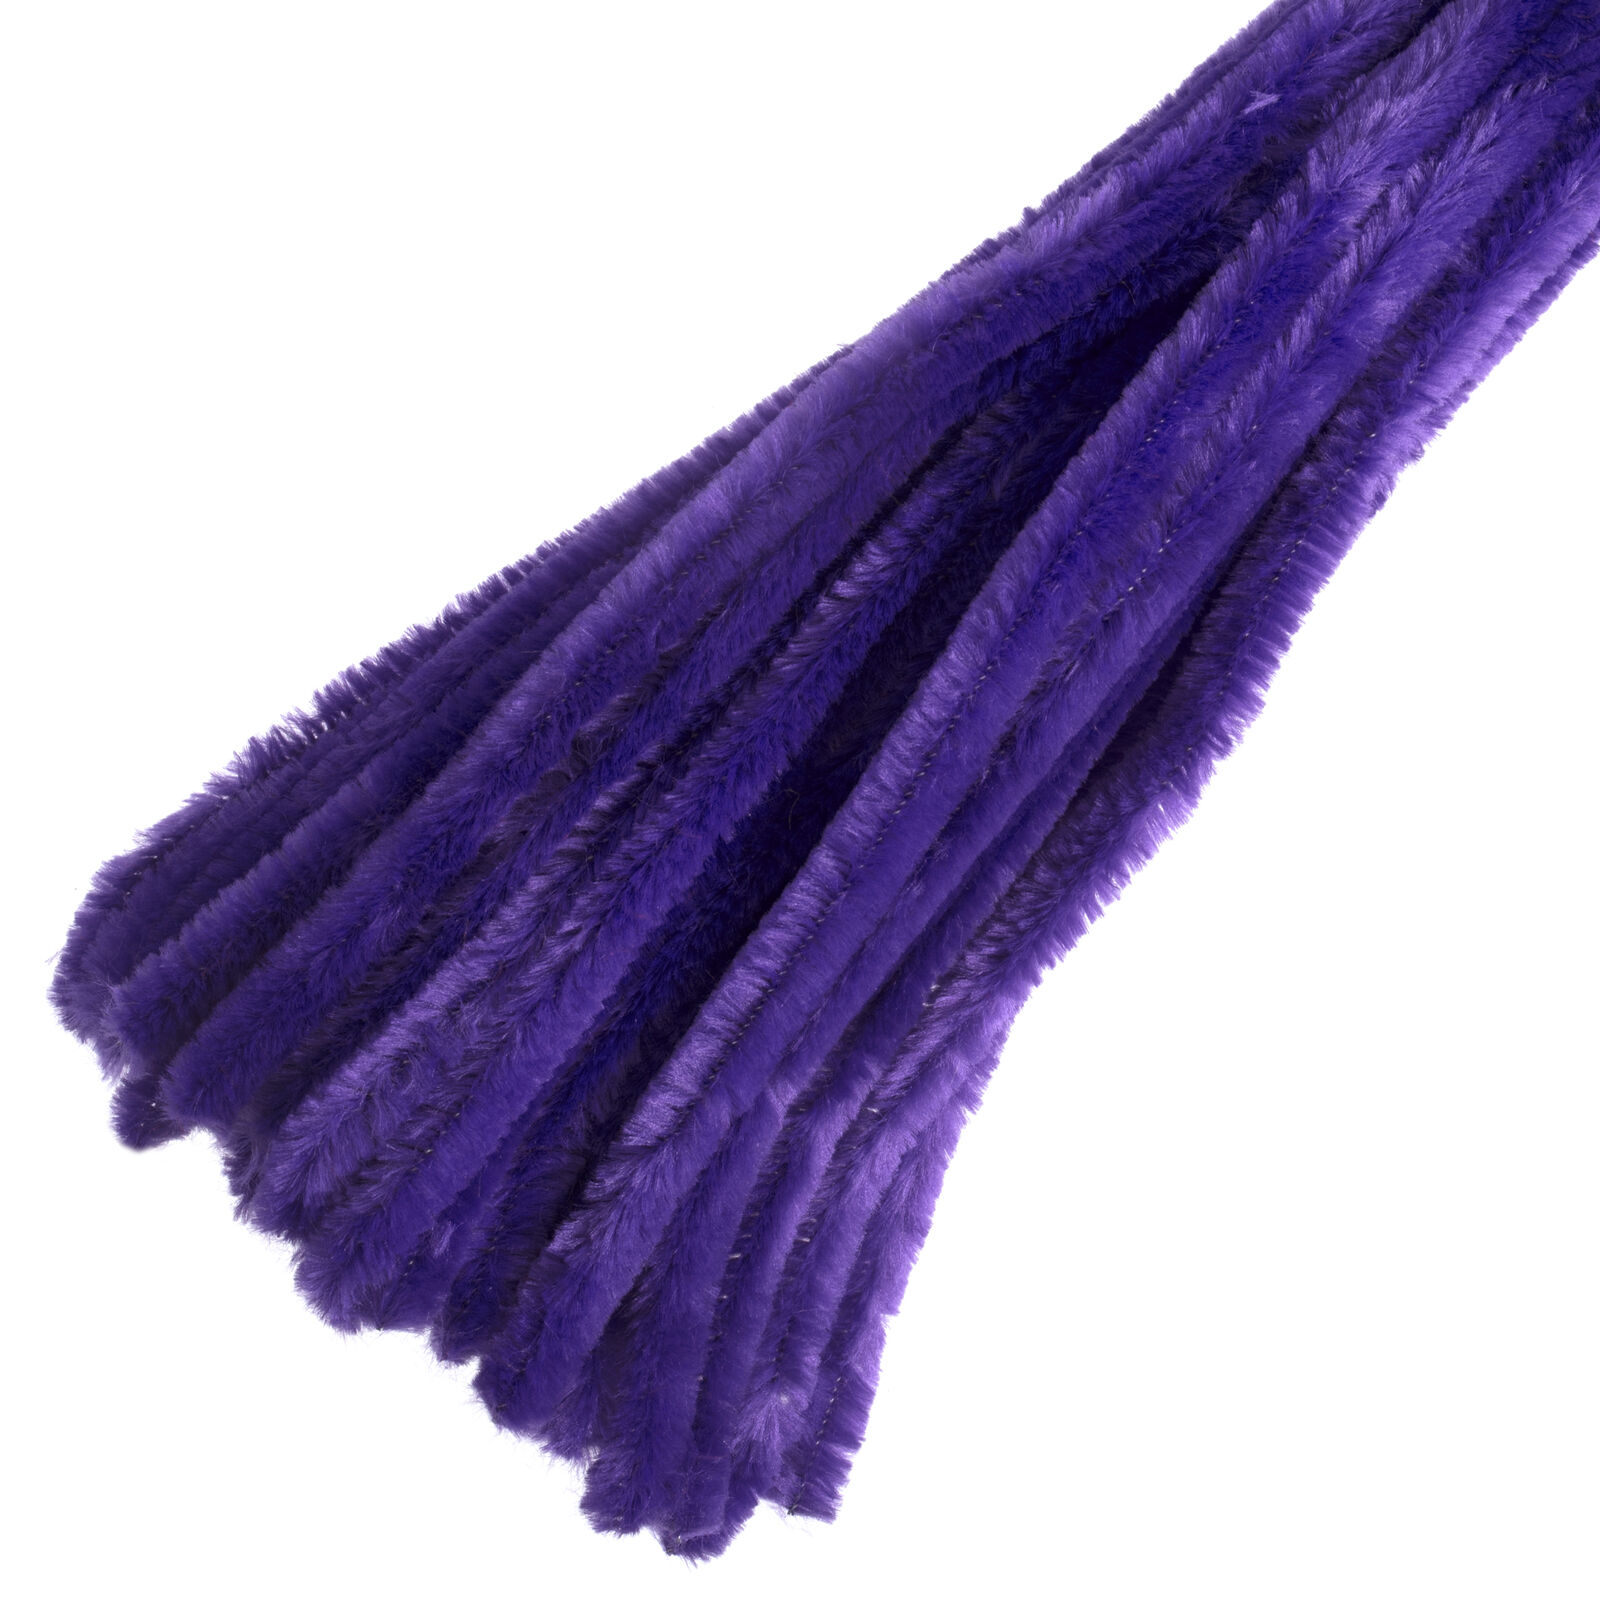 Chenille Stem - Purple                                                